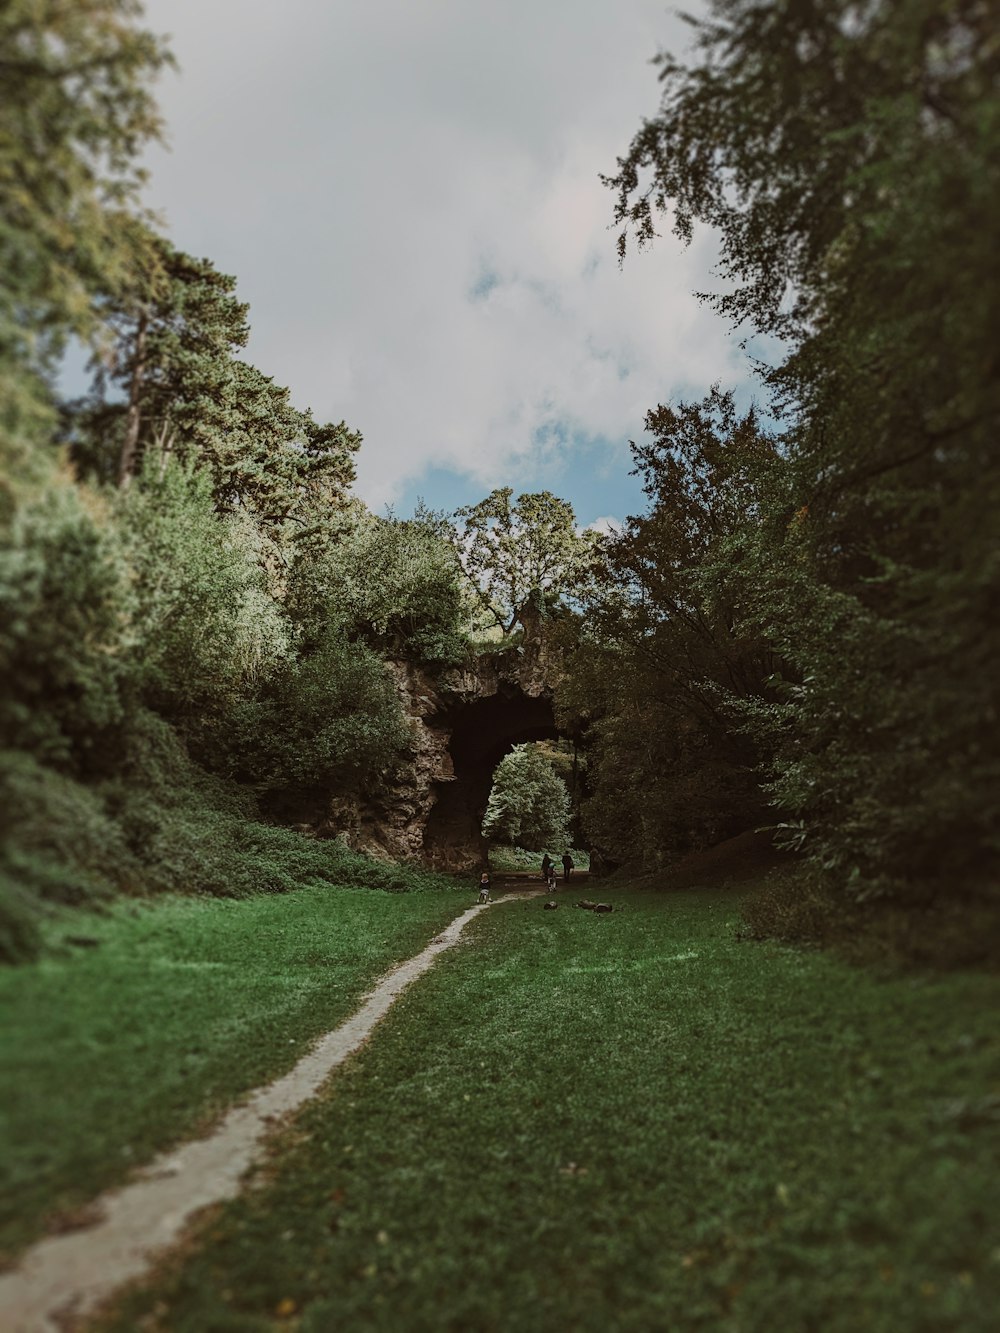 a path through a lush green forest under a cloudy sky